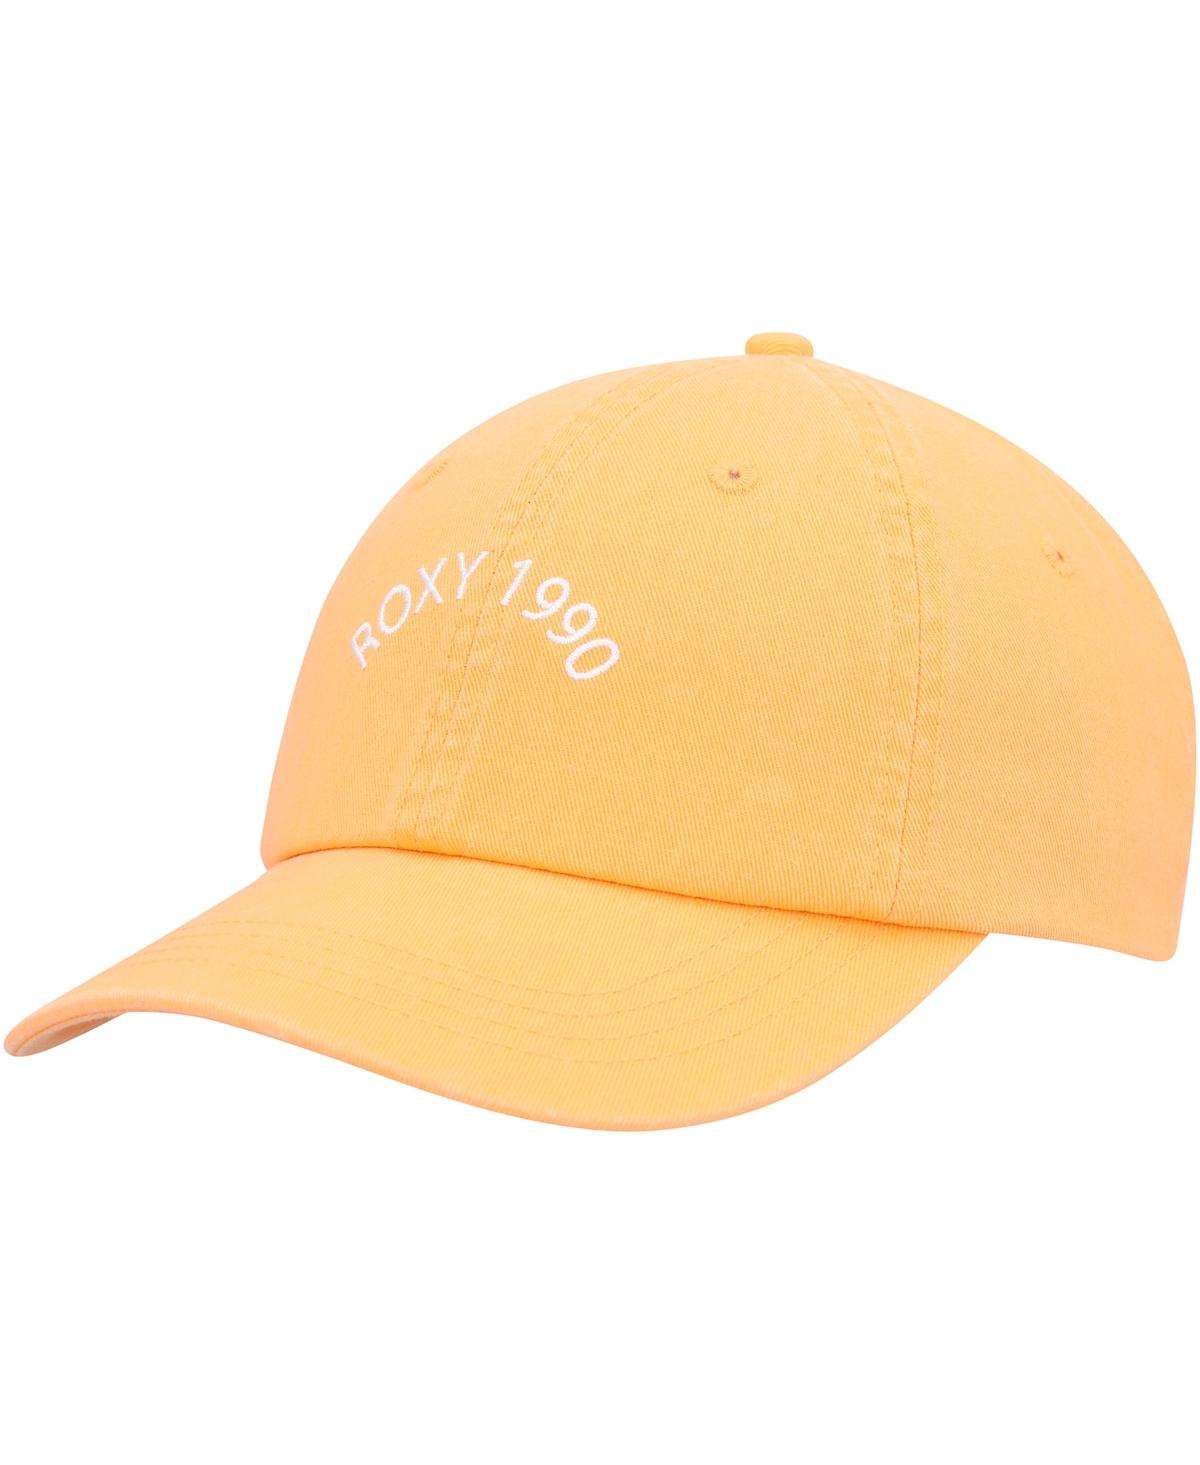 Roxy Women's  Orange Toadstool Adjustable Hat